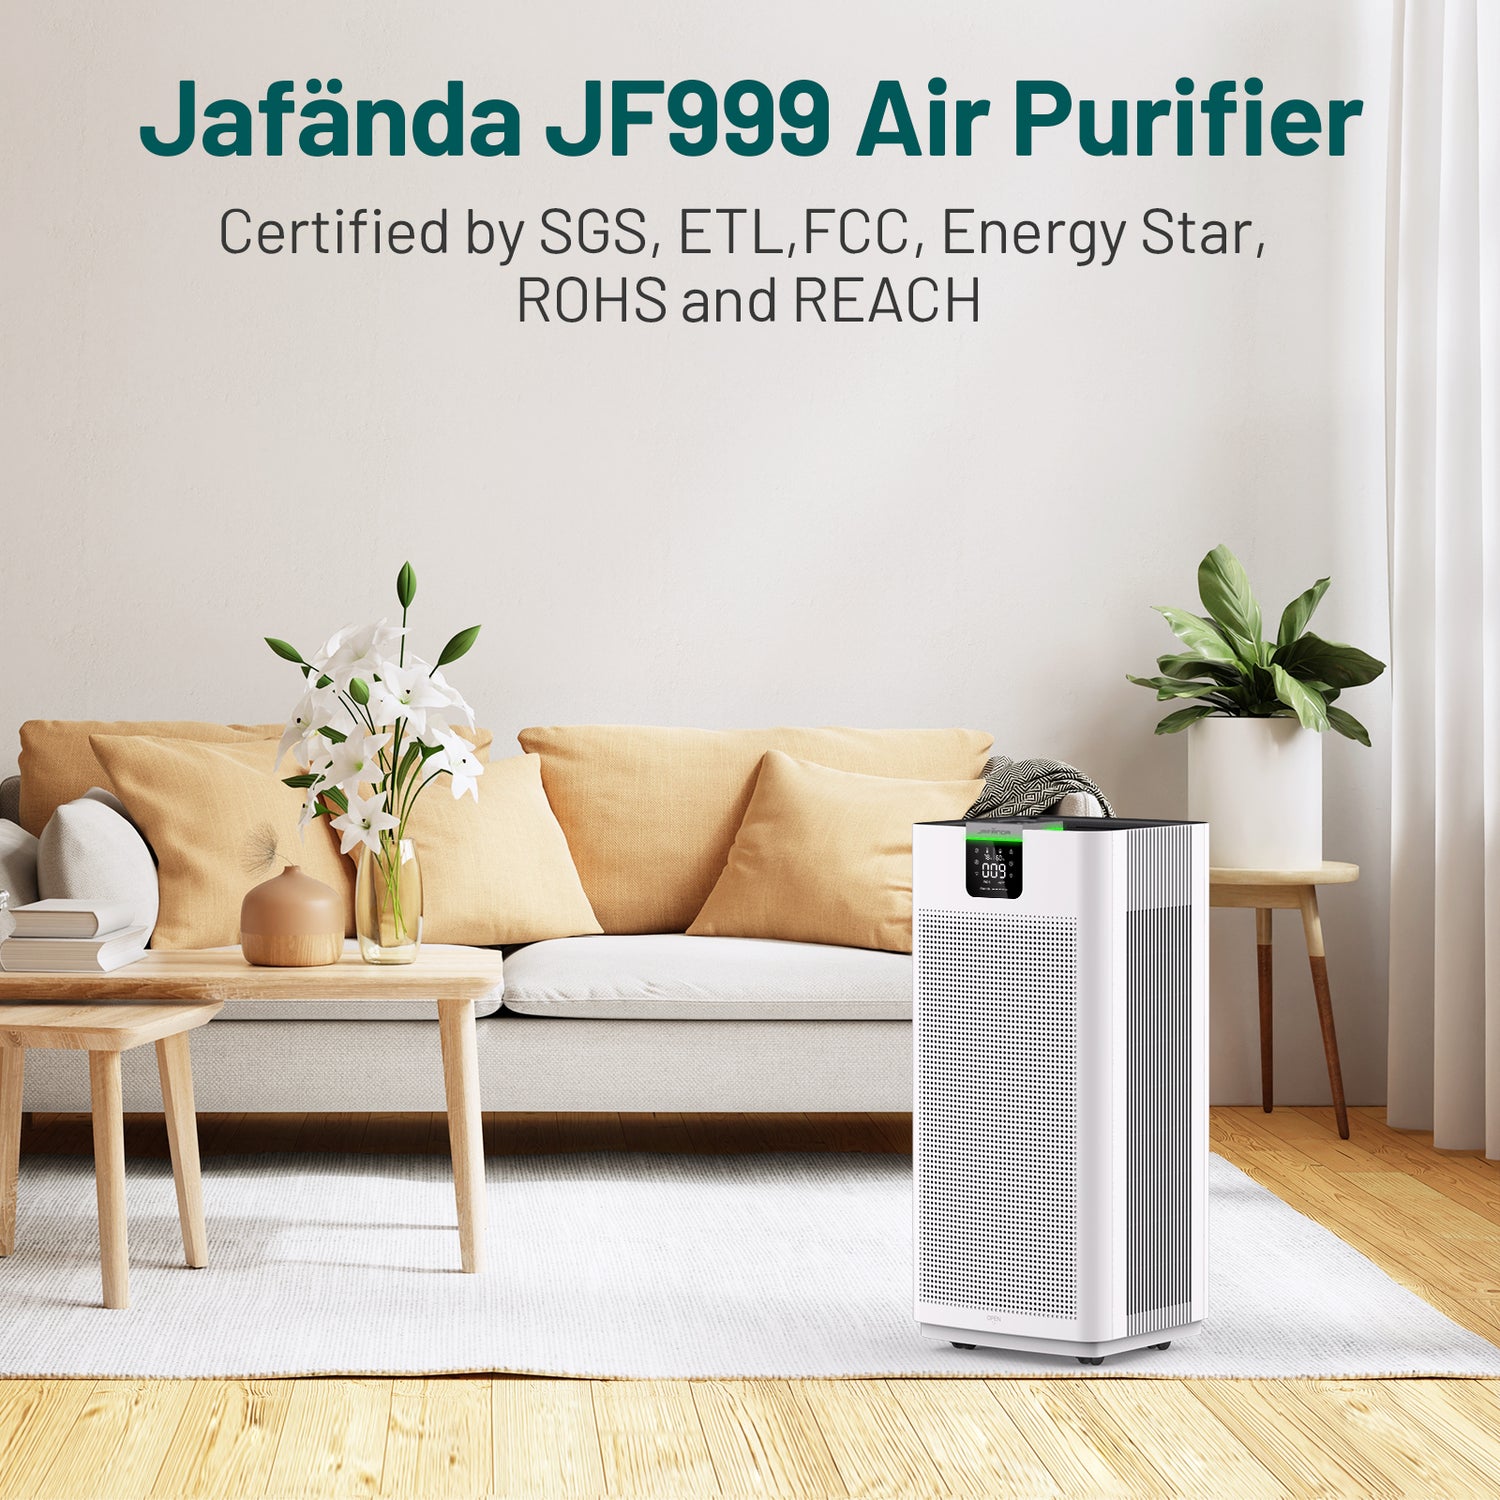 The effectiveness of Jafanda Air Purifier During Wildfire Season